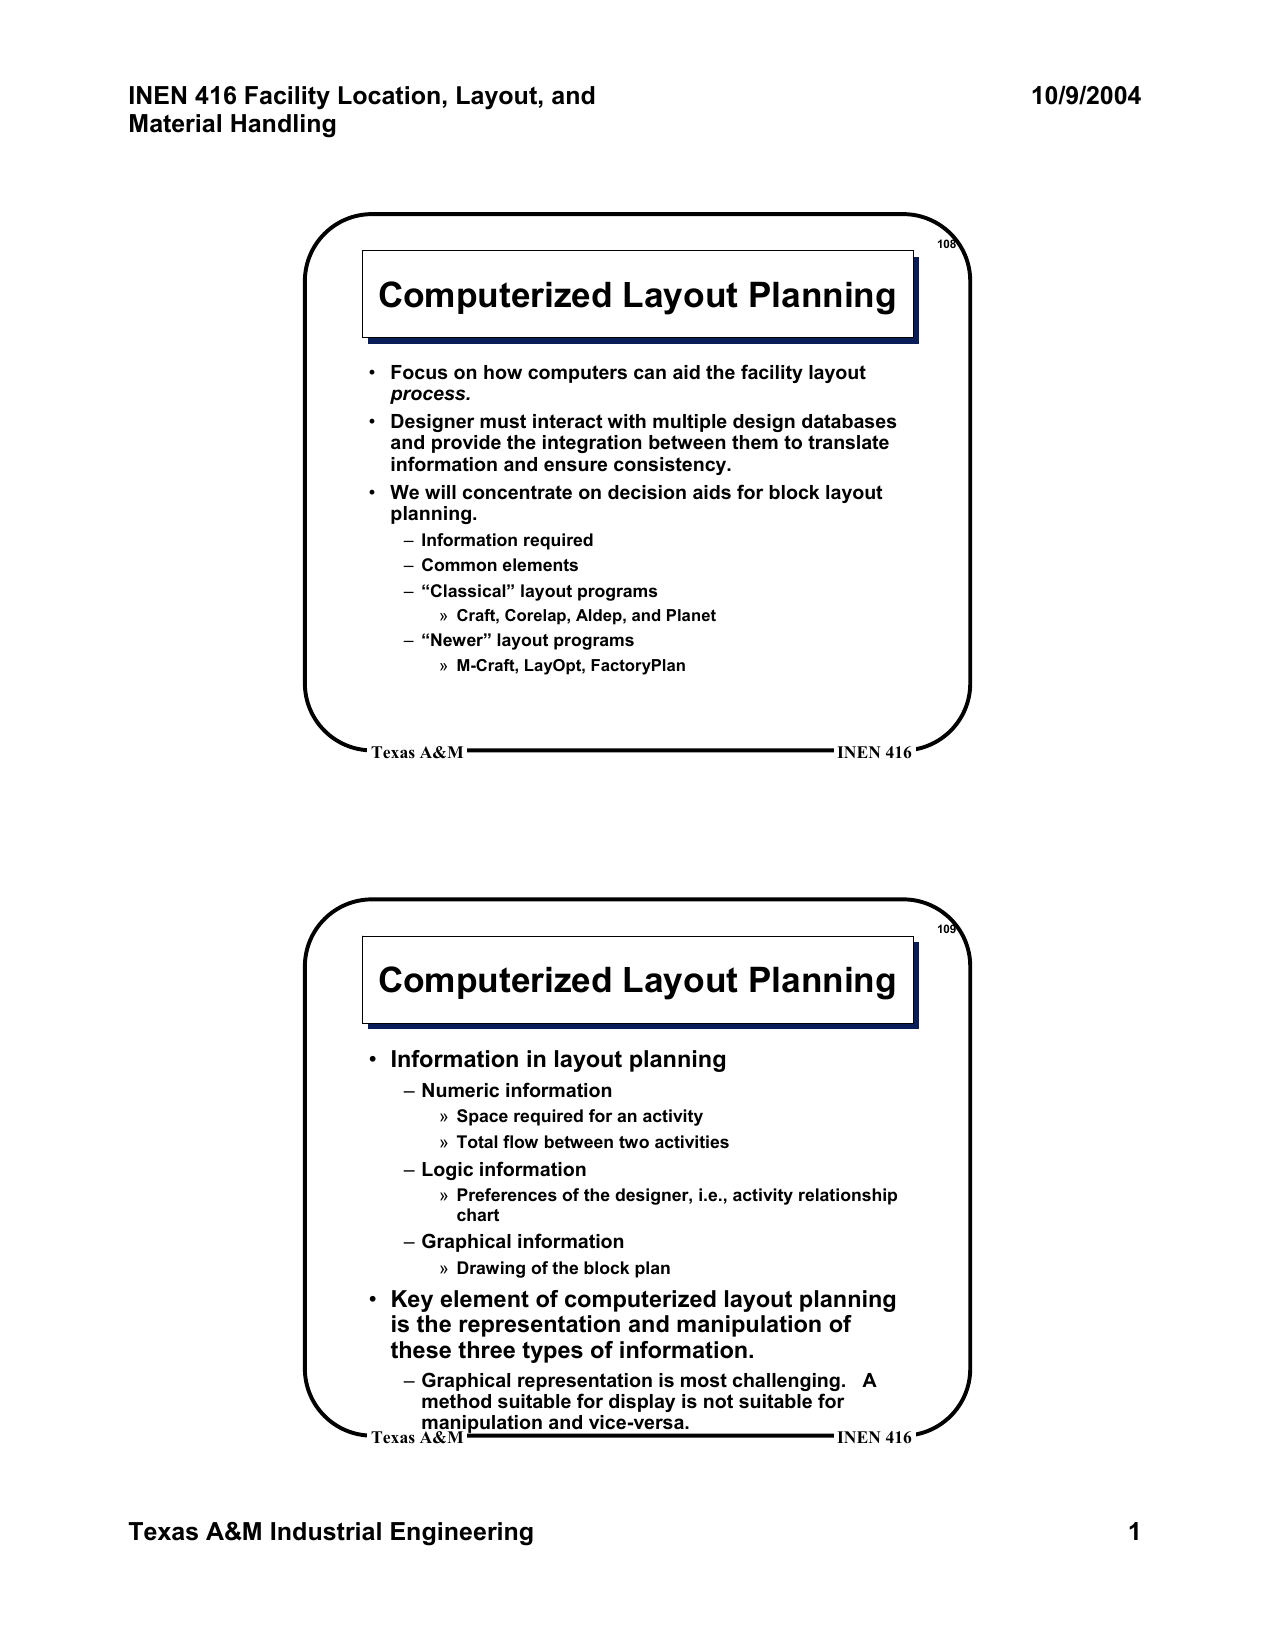 Material Handling Planning Chart